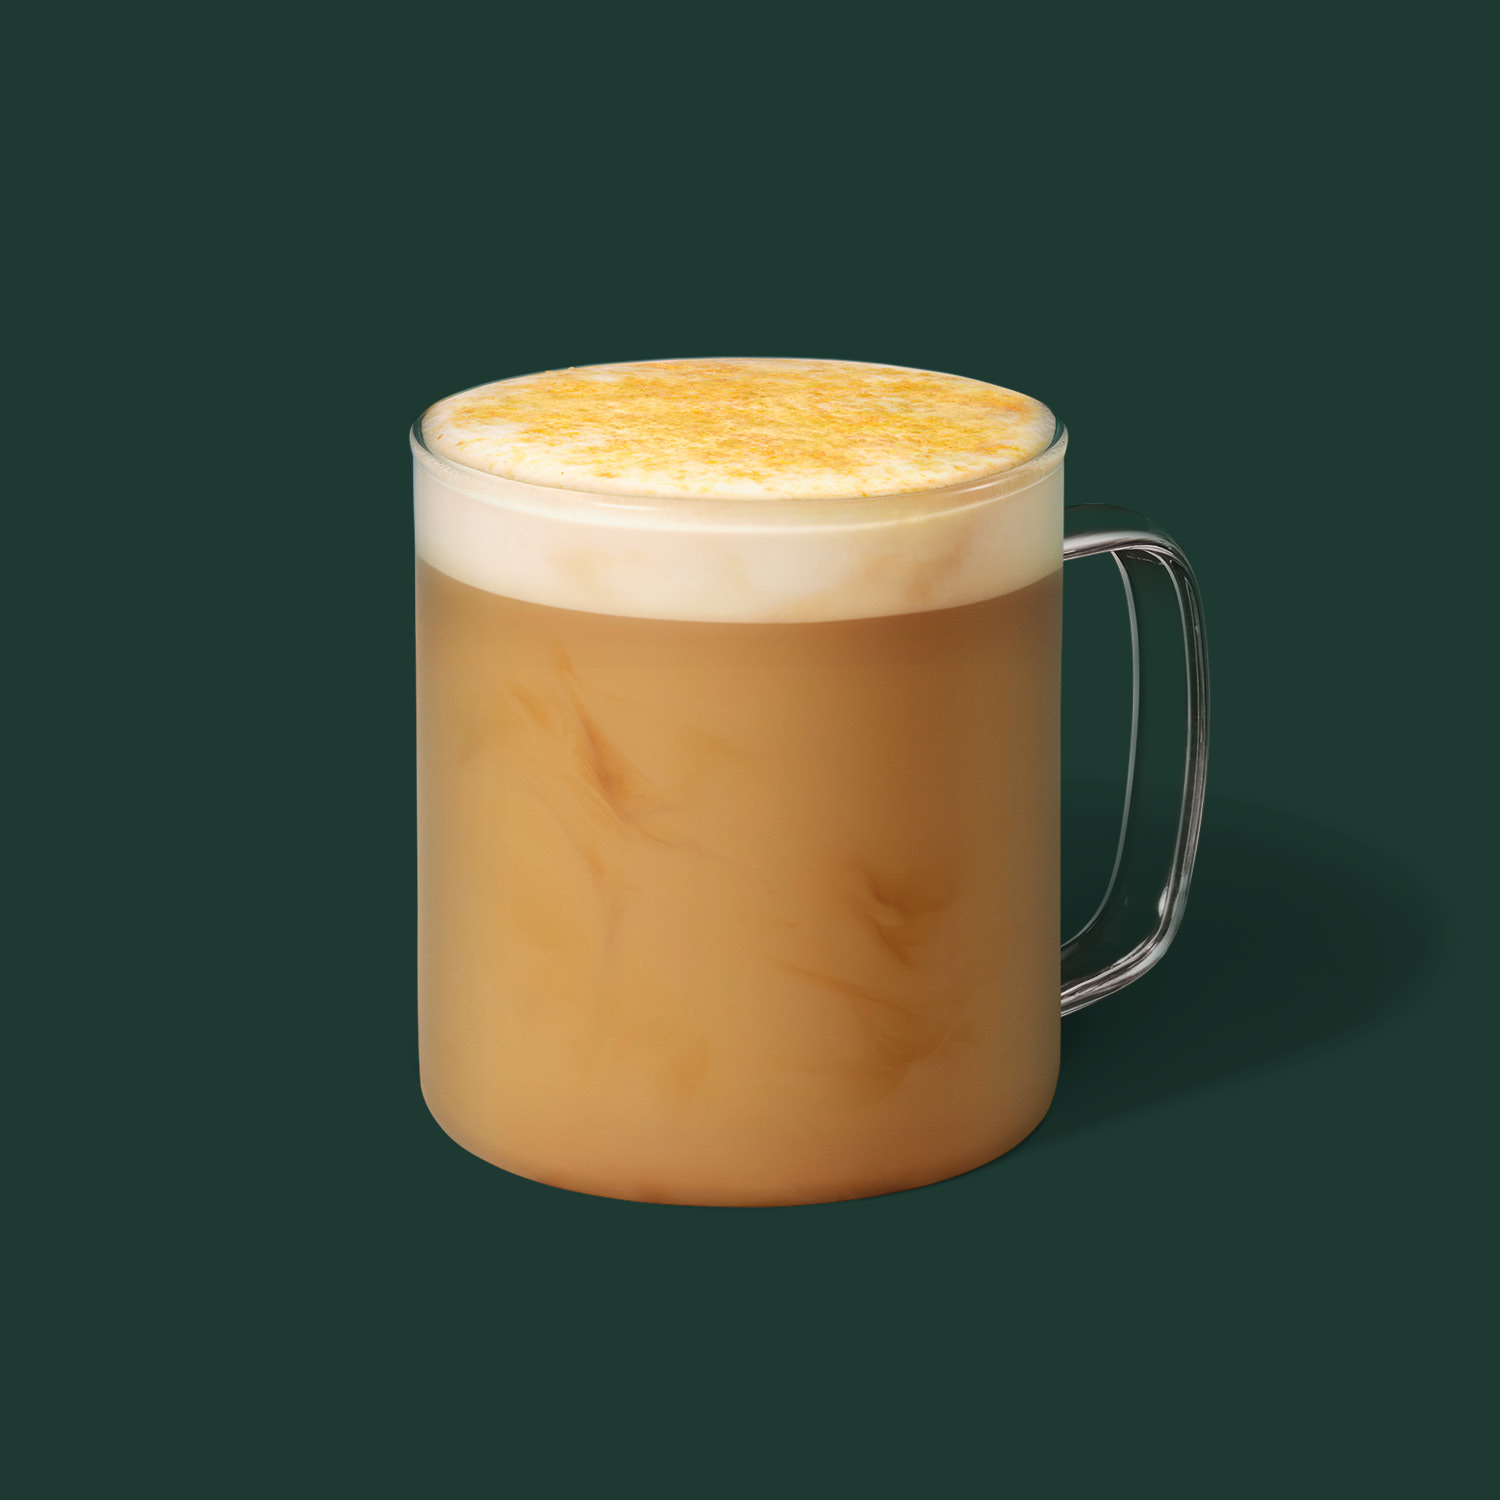 Hazelnut latte